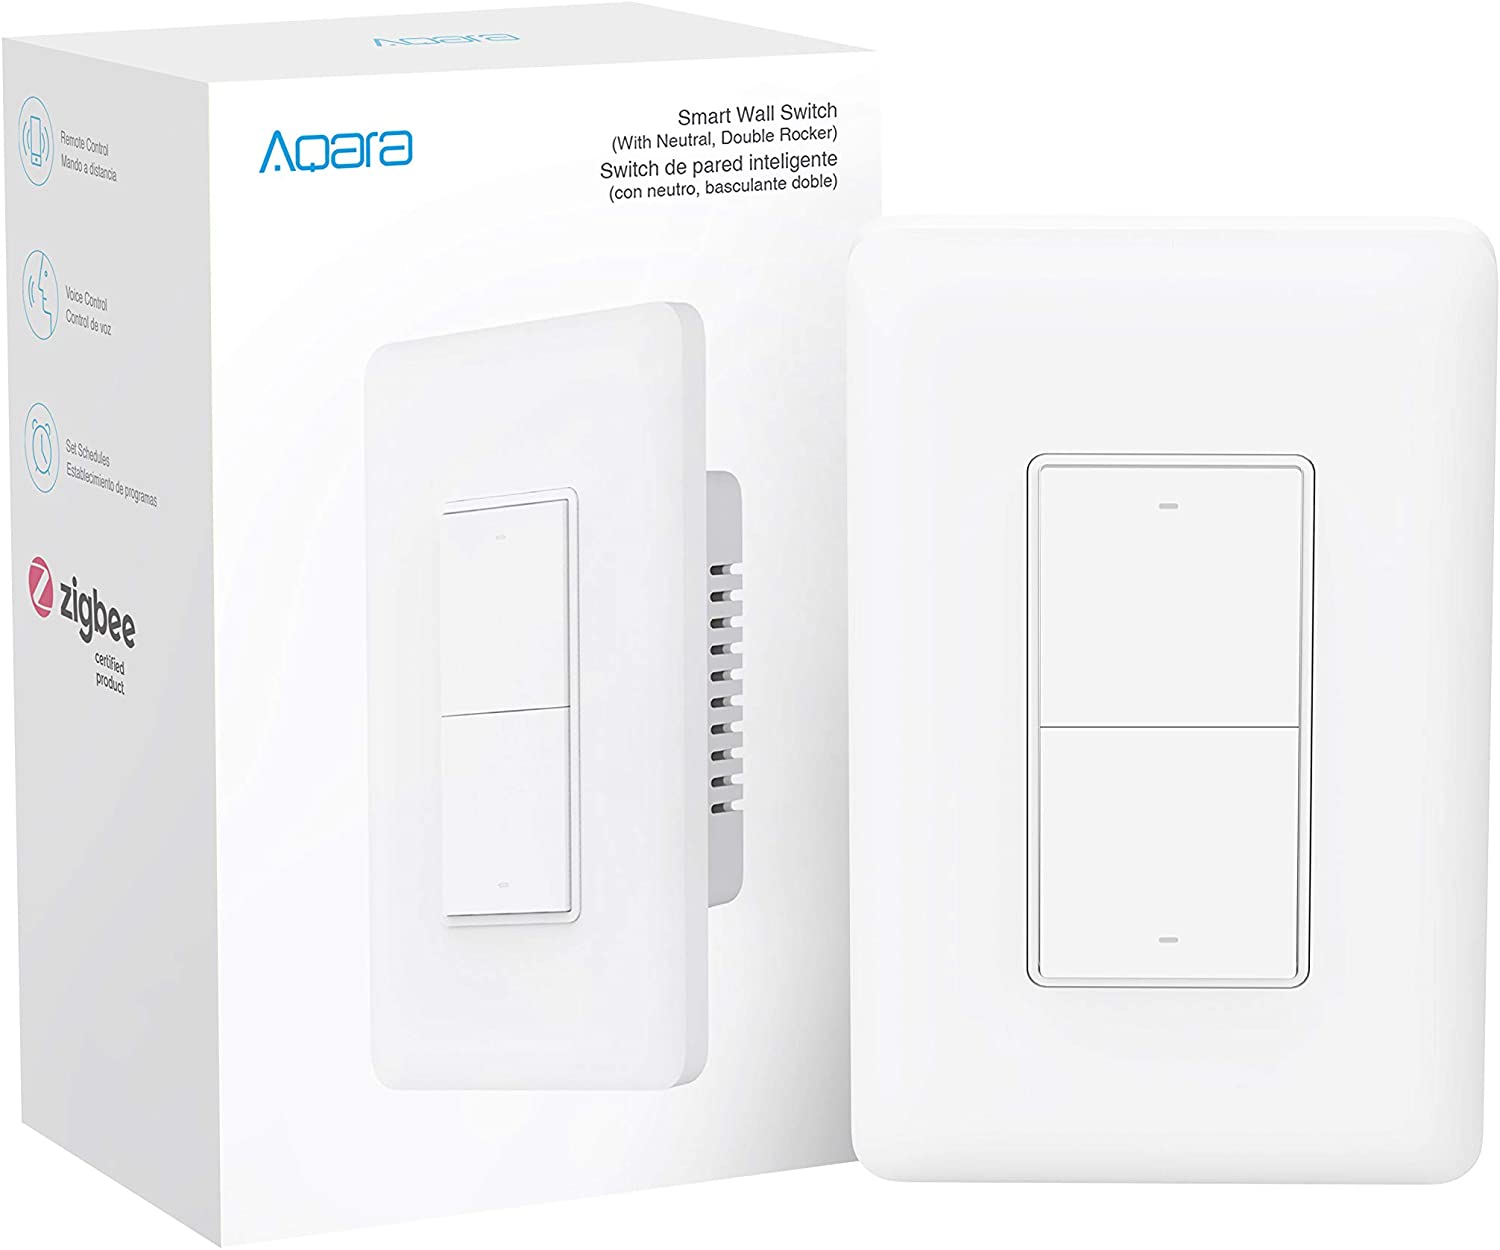 Aqara Smart Wall Switch - with Neutral, Double Rocker ...